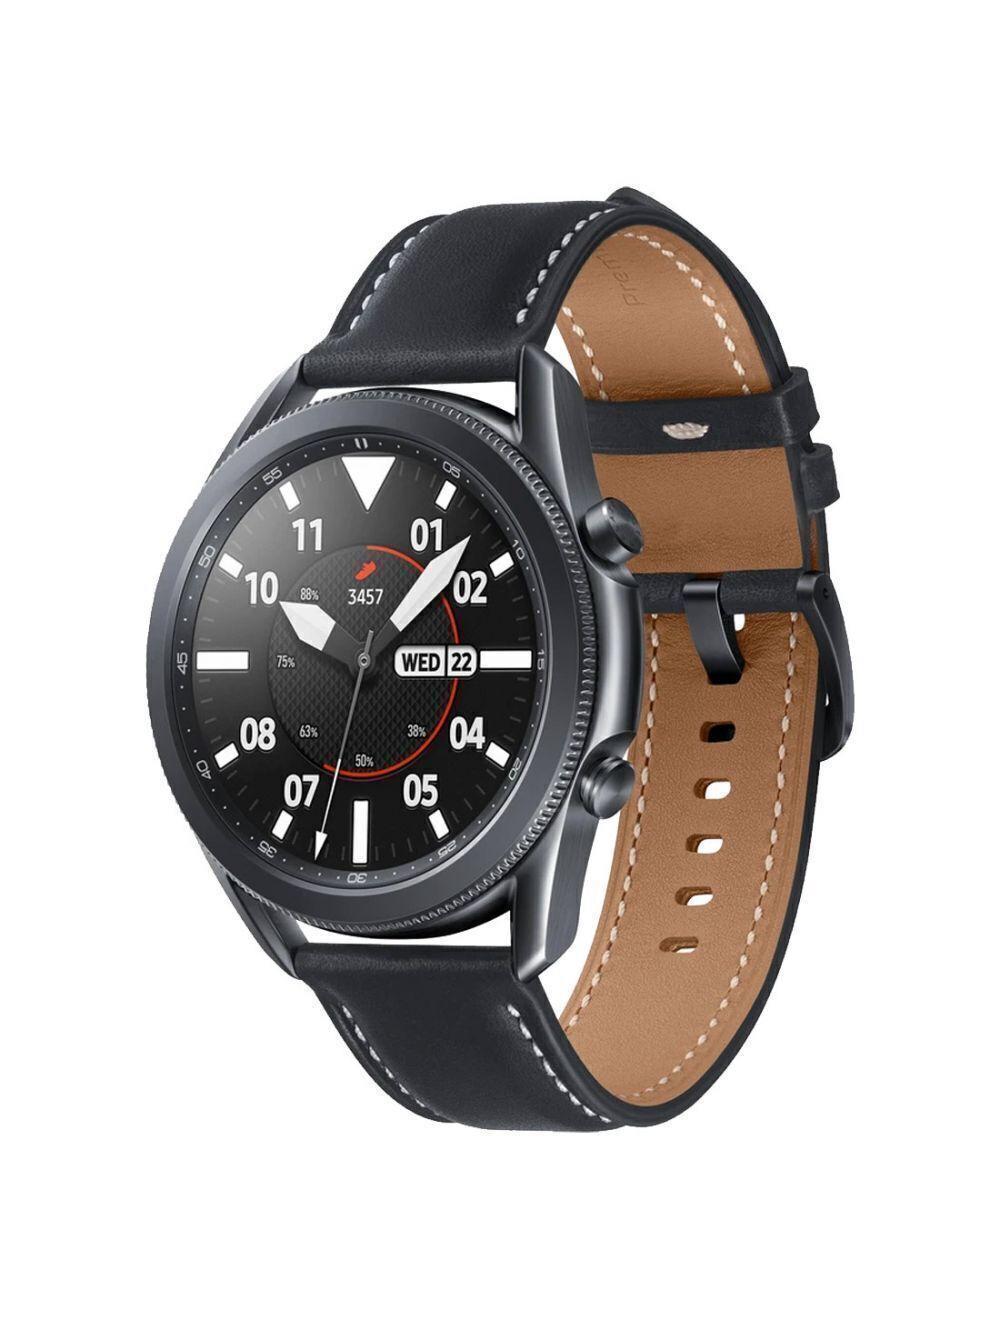 Samsung Galaxy Watch3 S Steel R845 (45MM, LTE) Mystic Black - Good (Refurbished)